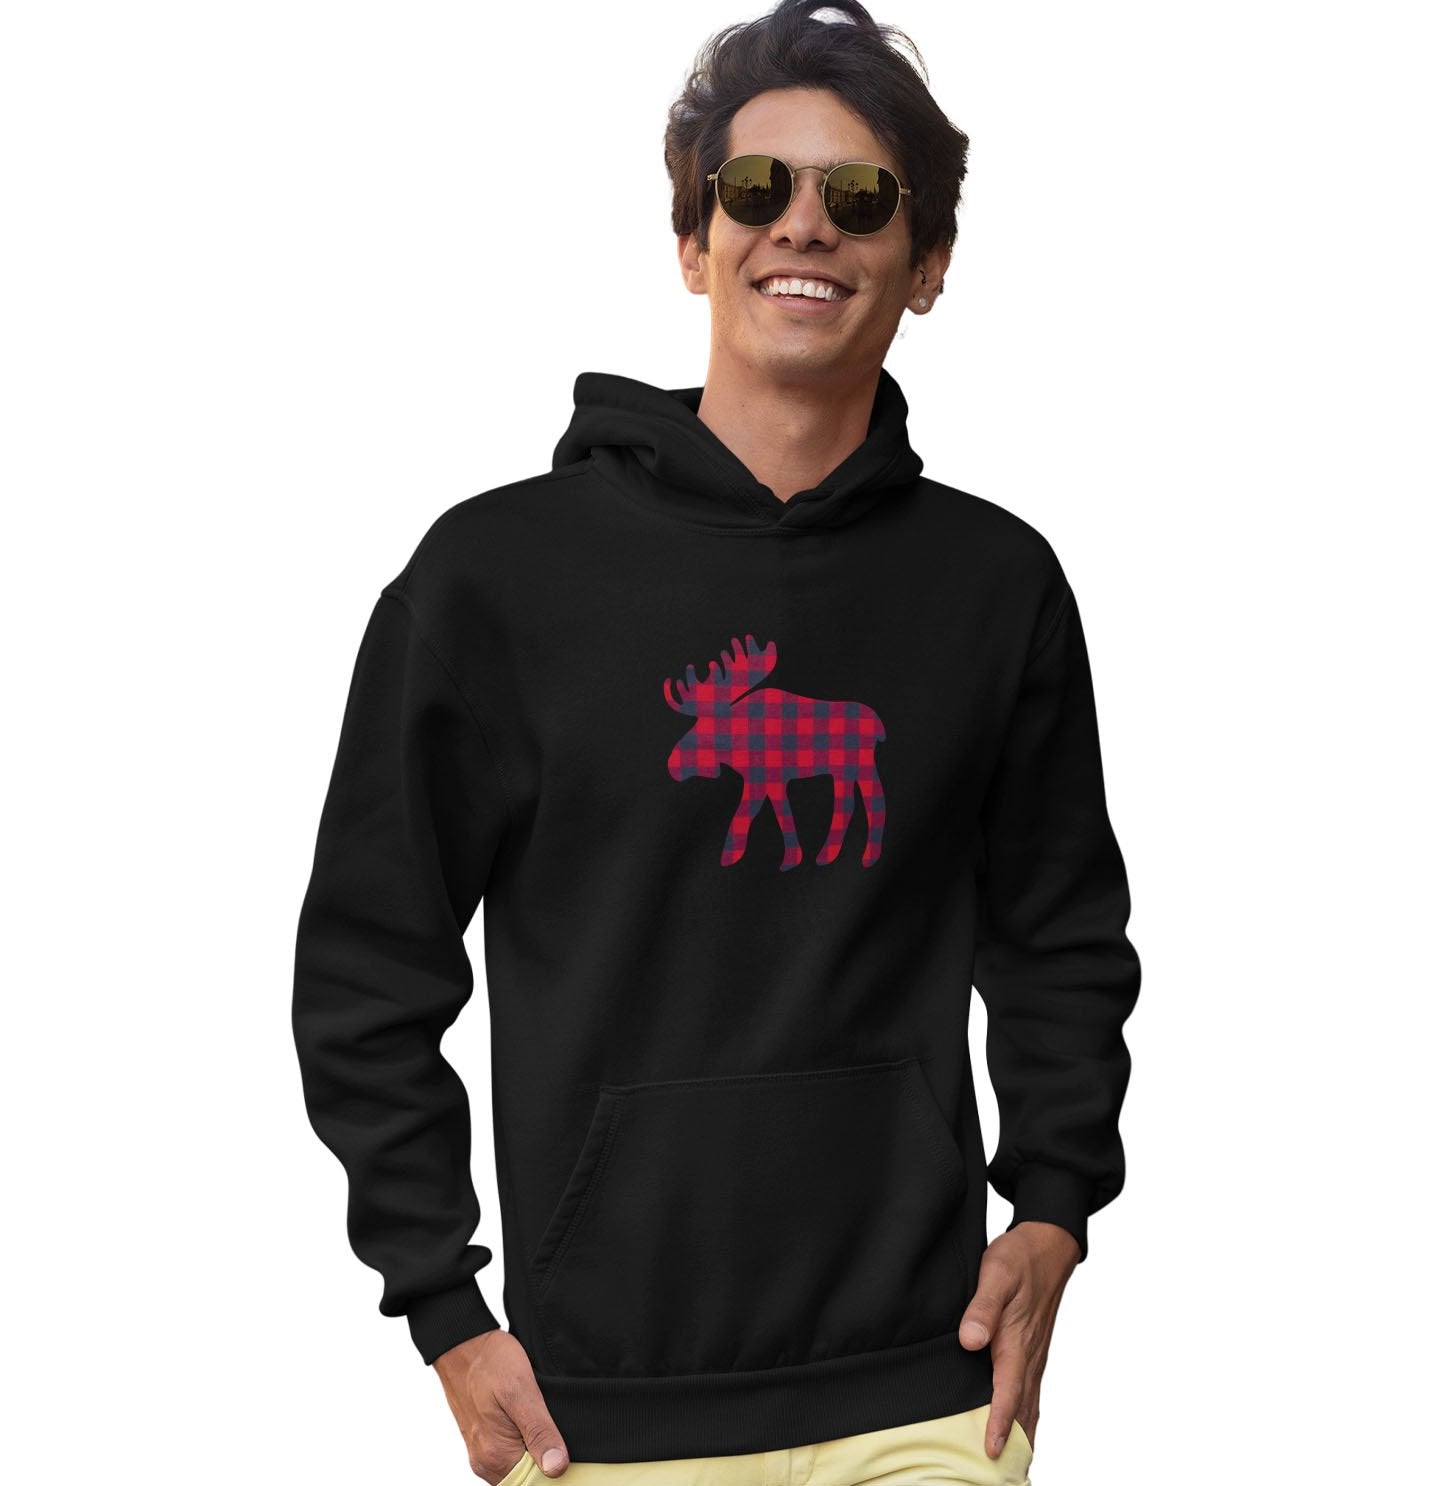 Plaid Moose - Adult Unisex Hoodie Sweatshirt